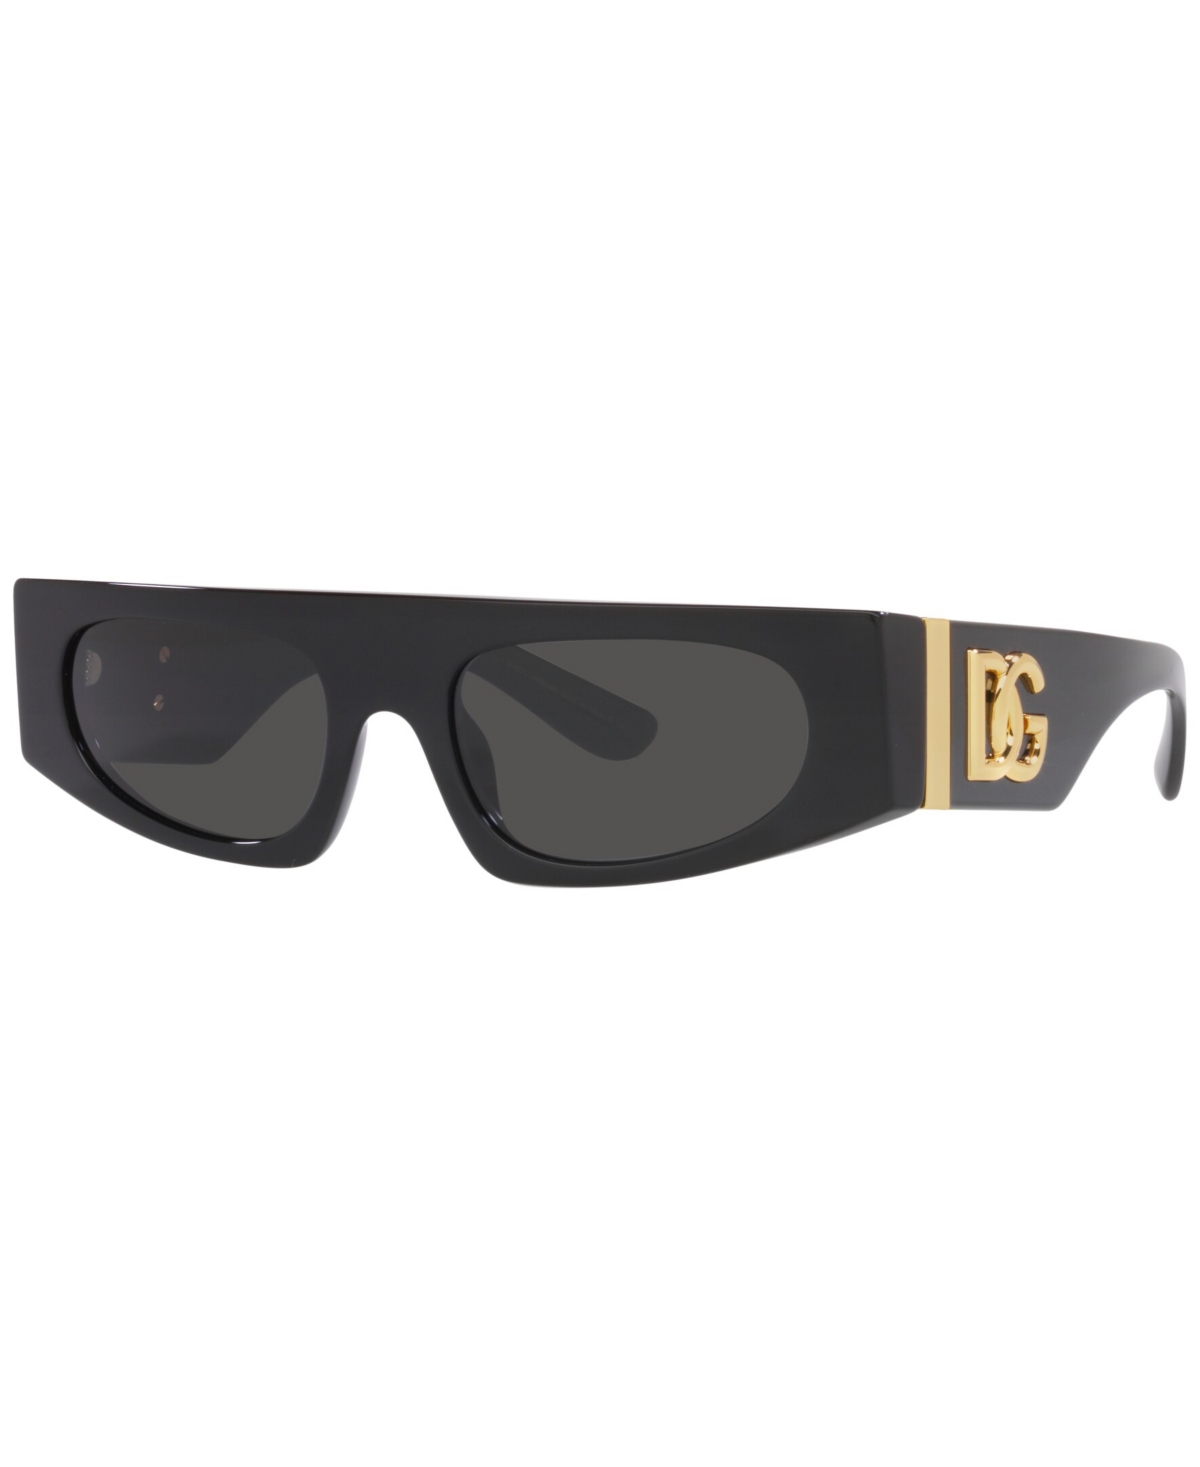 Dolce&Gabbana Women's Sunglasses, DG4411 - Black